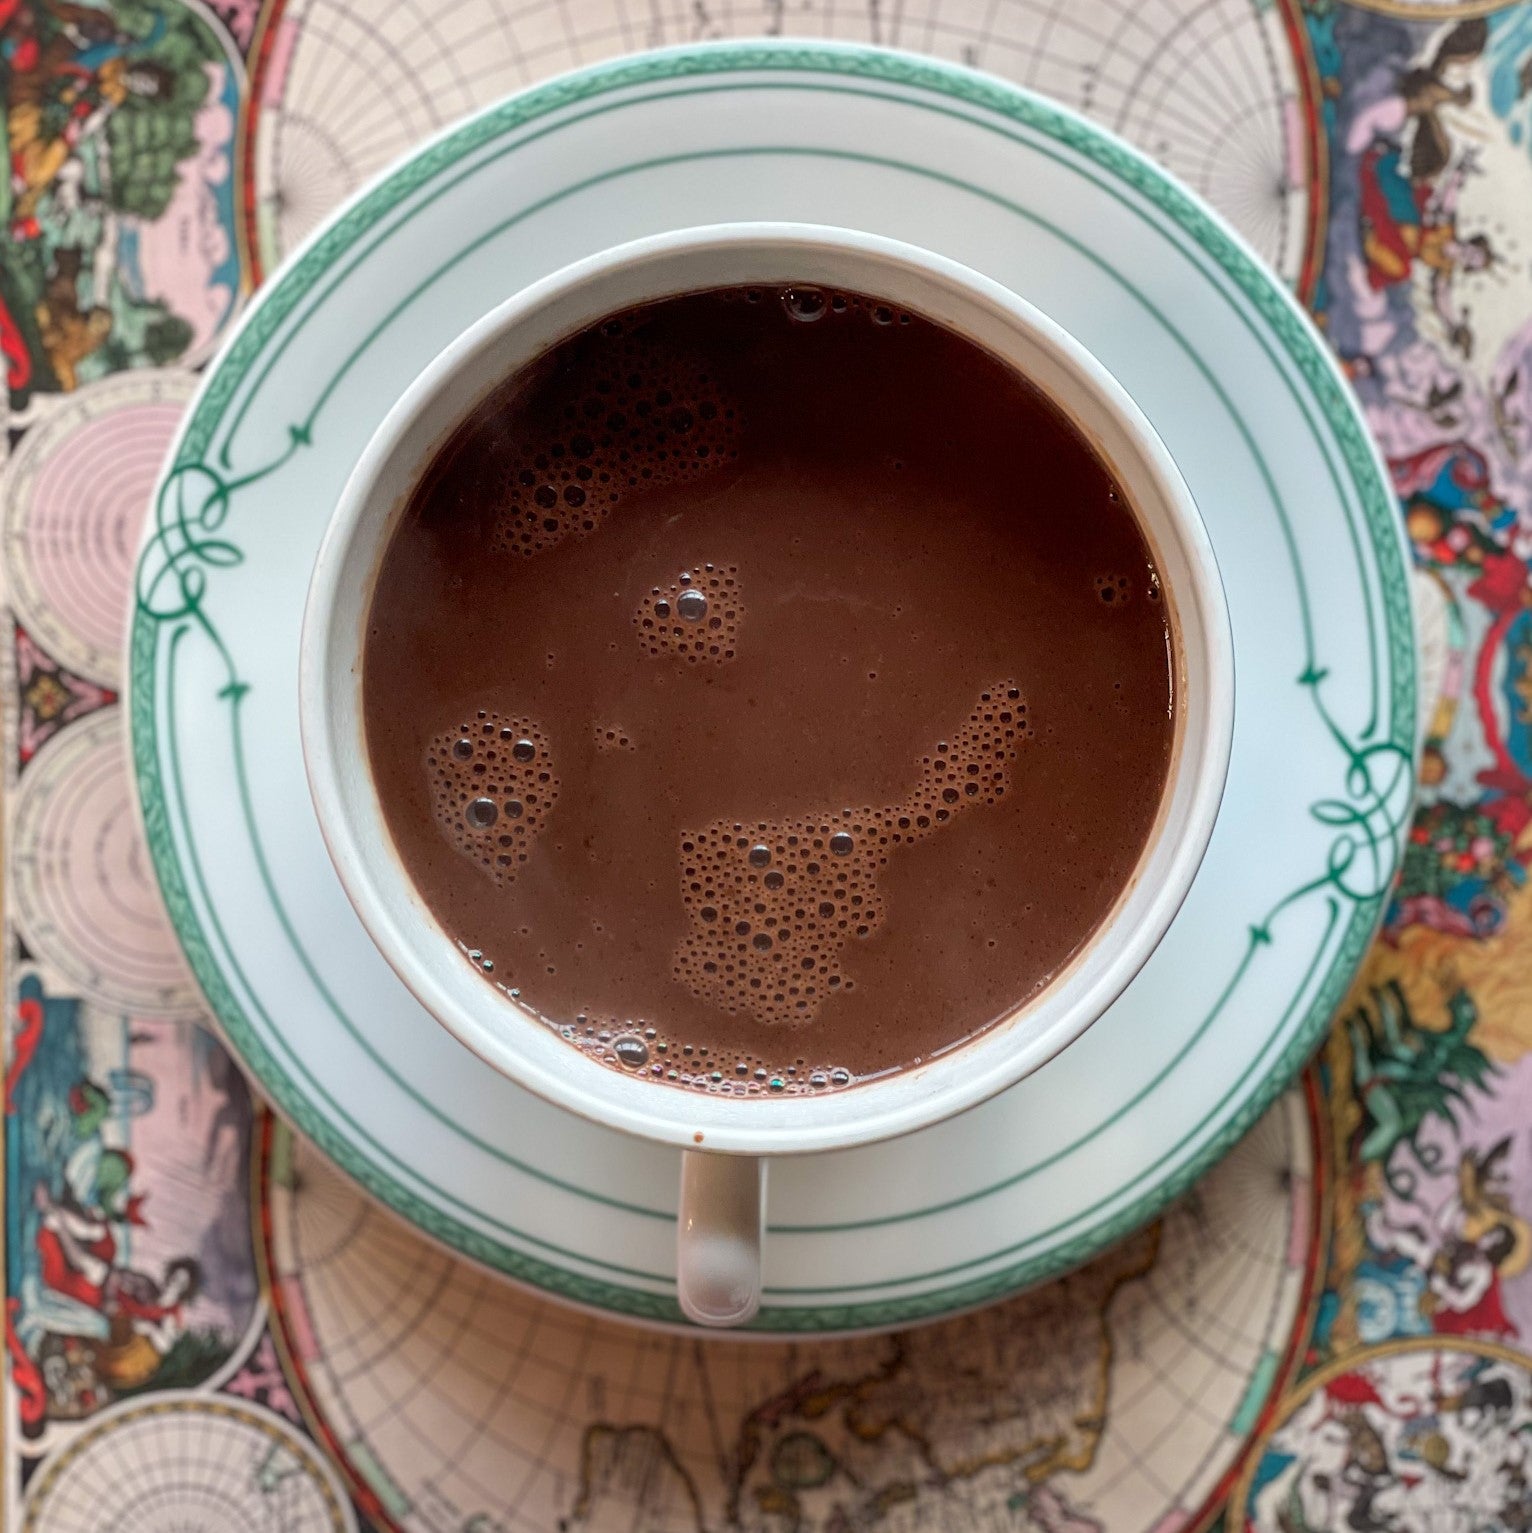 vosges-haut-chocolat-blog/travel-the-world-through-chocolate-drinking-chocolates